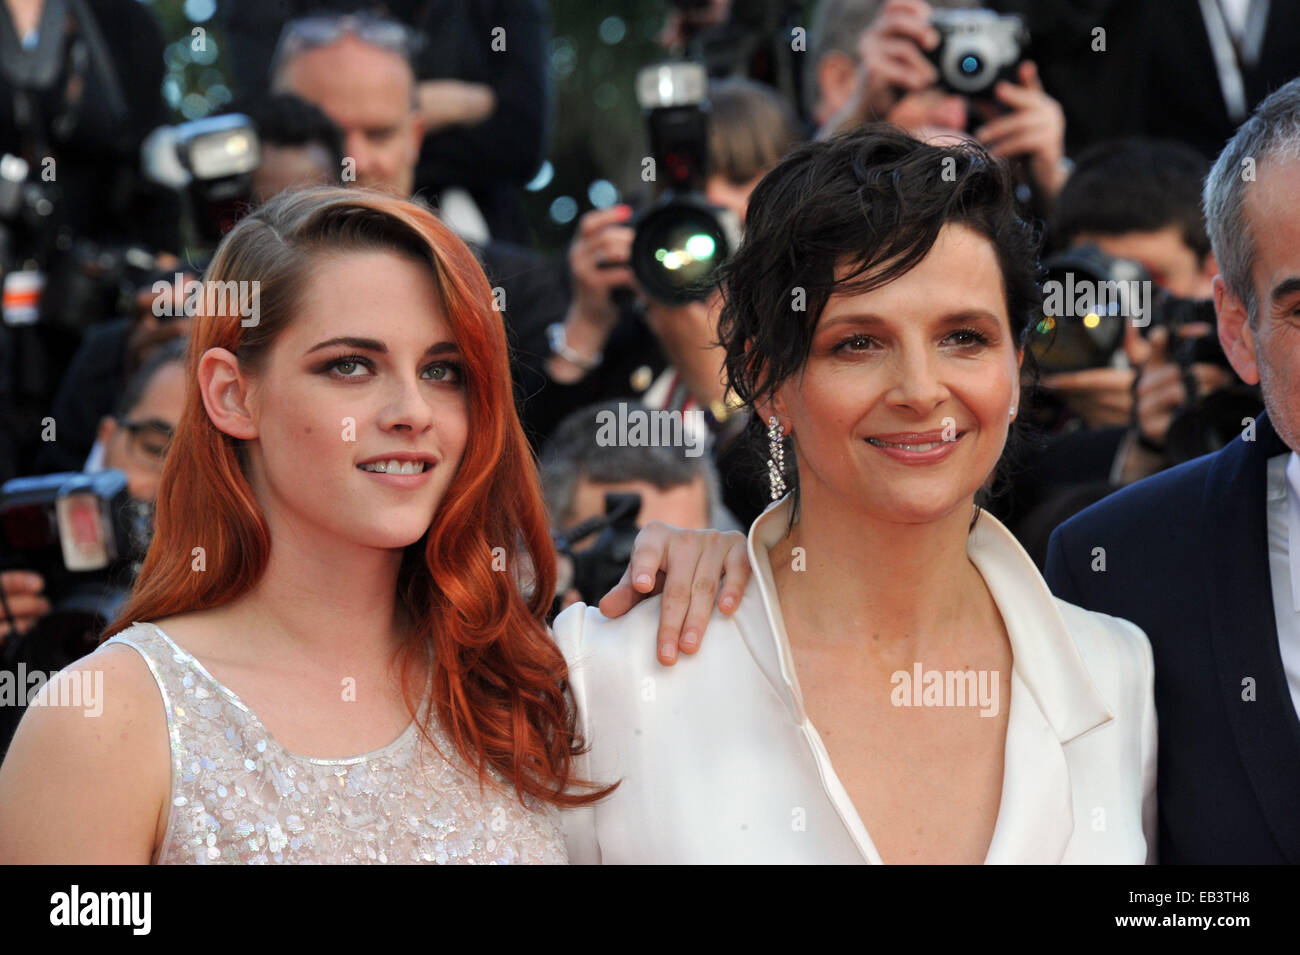 El 67º Festival de Cannes anual - "Nubes de Sils Maria' - Premiere Featuring: Kristen Stewart,Juliette Binoche en Cannes donde: Cuando: 23 de mayo de 2014 Foto de stock